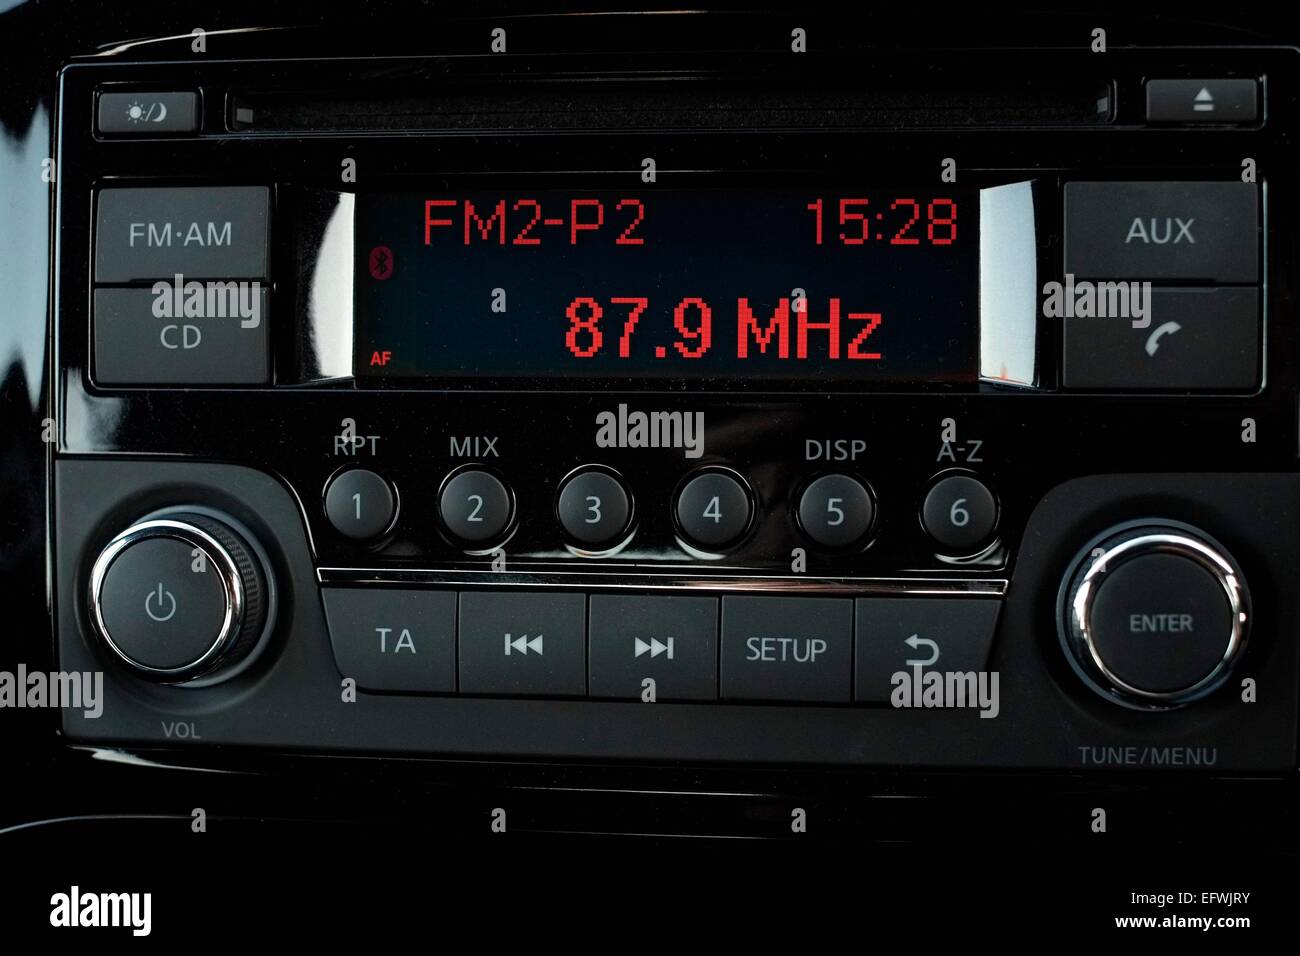 Nissan Juke Car radio showing button control detail Stock Photo - Alamy